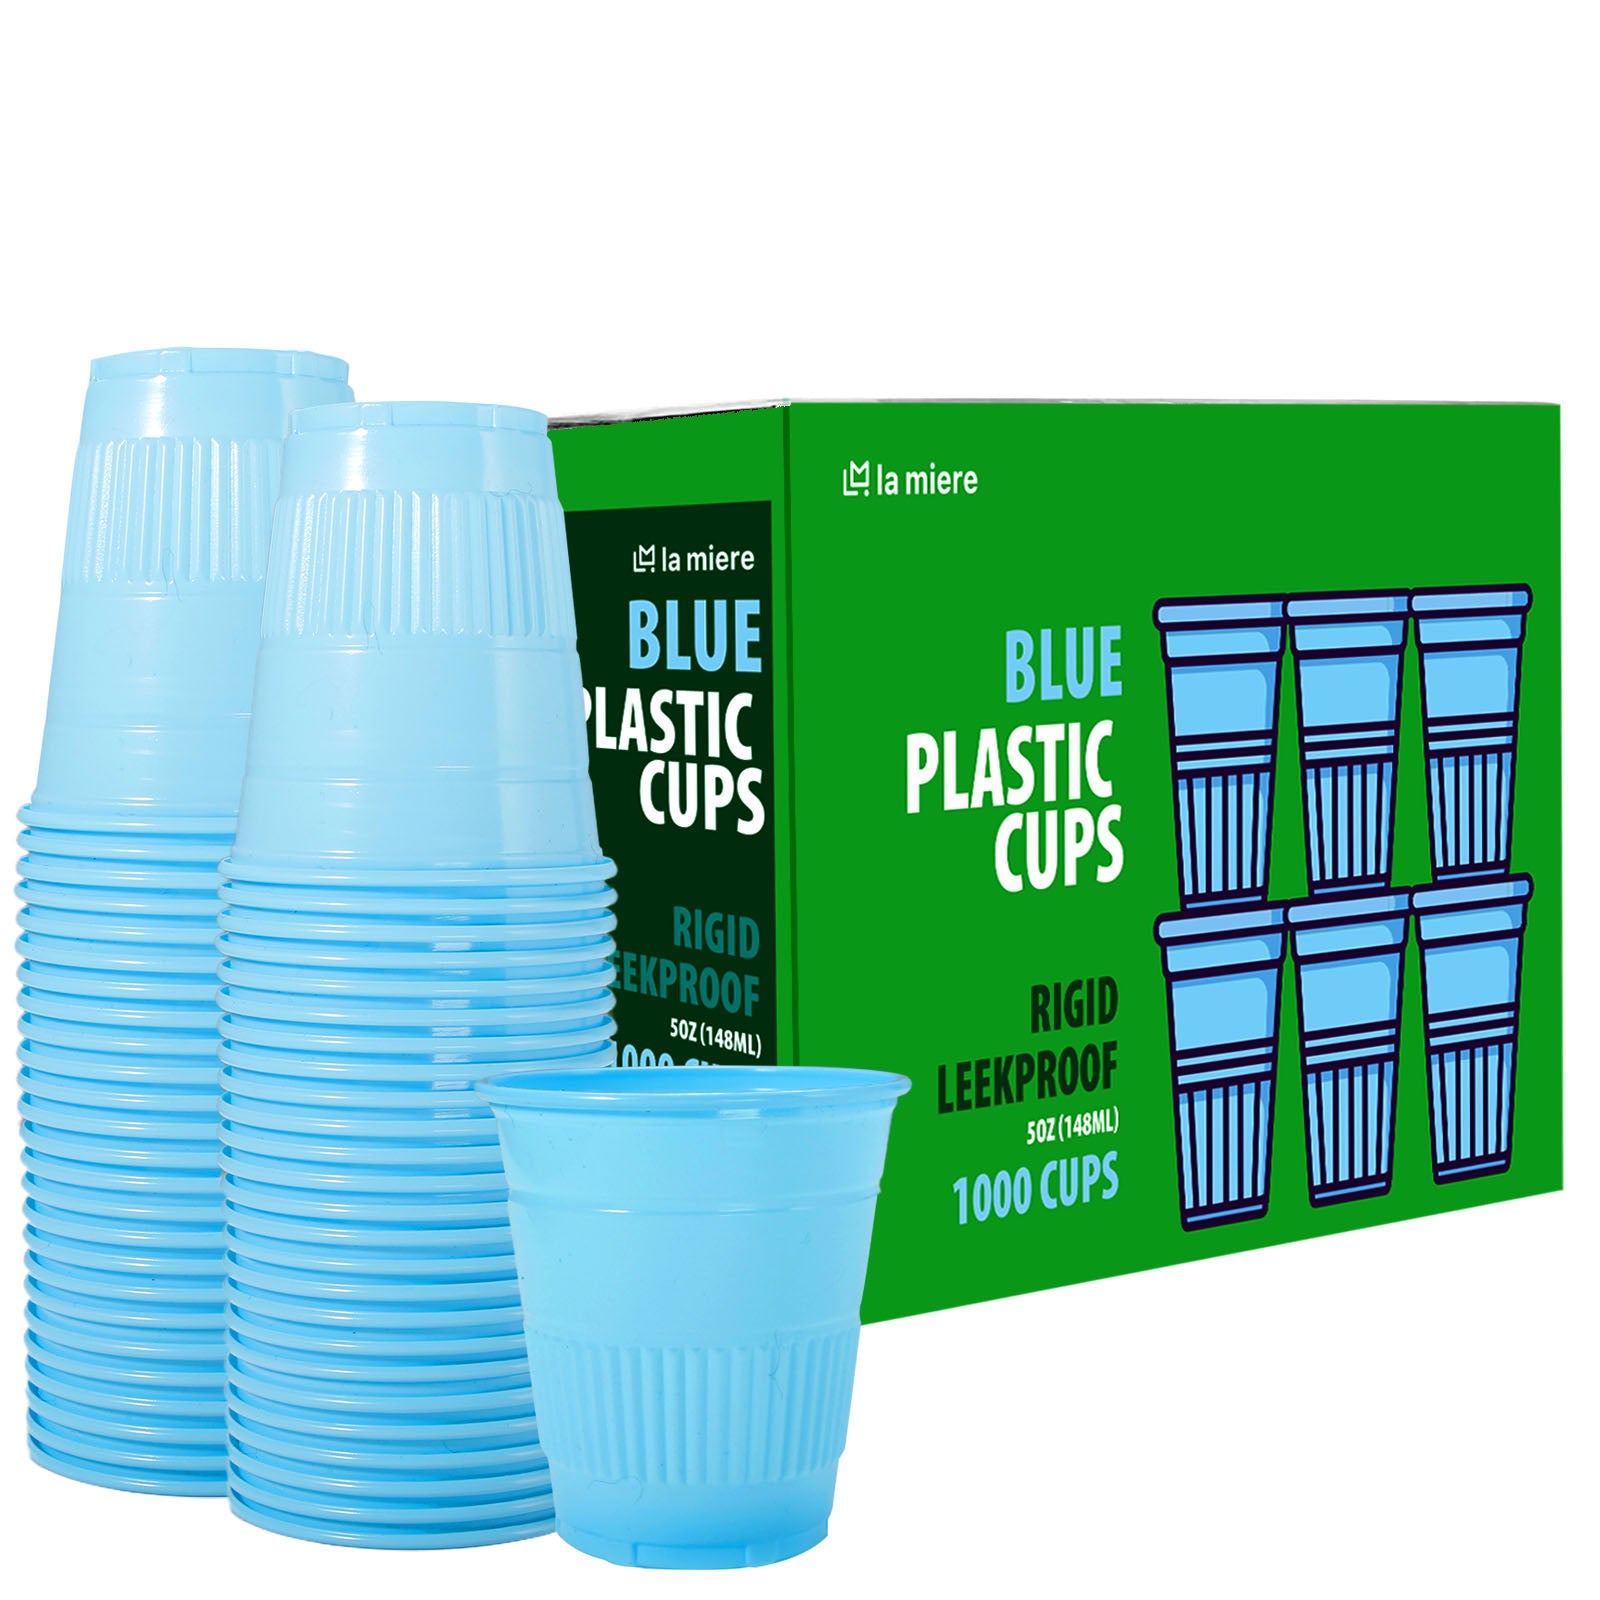 L3A Enterprise - For Sale Plastic Cups Sizes Available Wholesale price  (1000 pcs) 5 oz - Php 13.00/pack 6 oz - Php 13.75/pack 7 oz - Php  14.50/pack 8 oz - Php